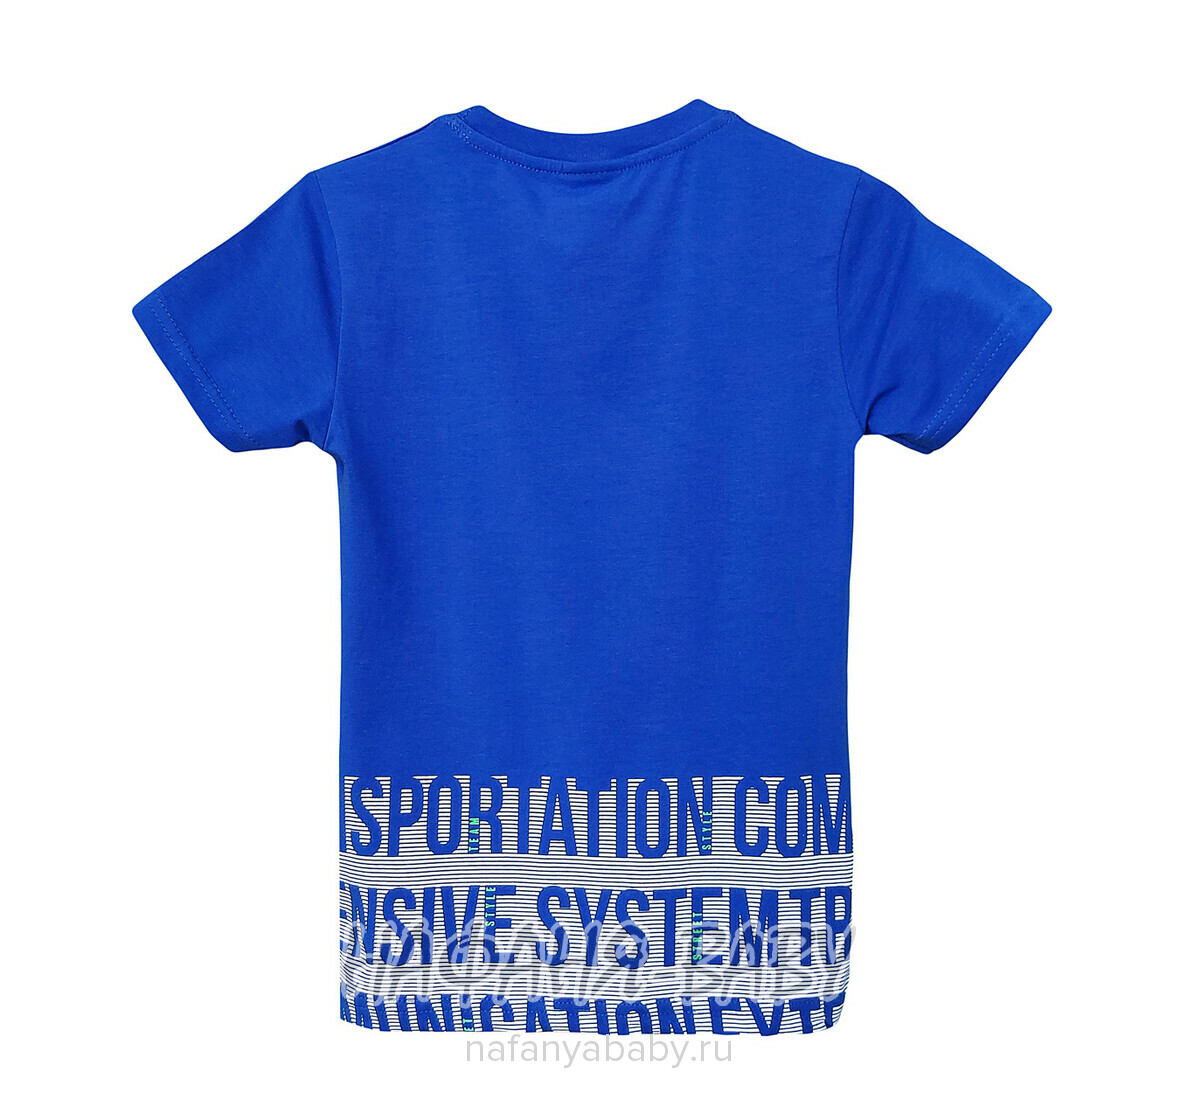 Подростковая футболка RCW арт. 5834, 10-14 лет, цвет синий, оптом Турция